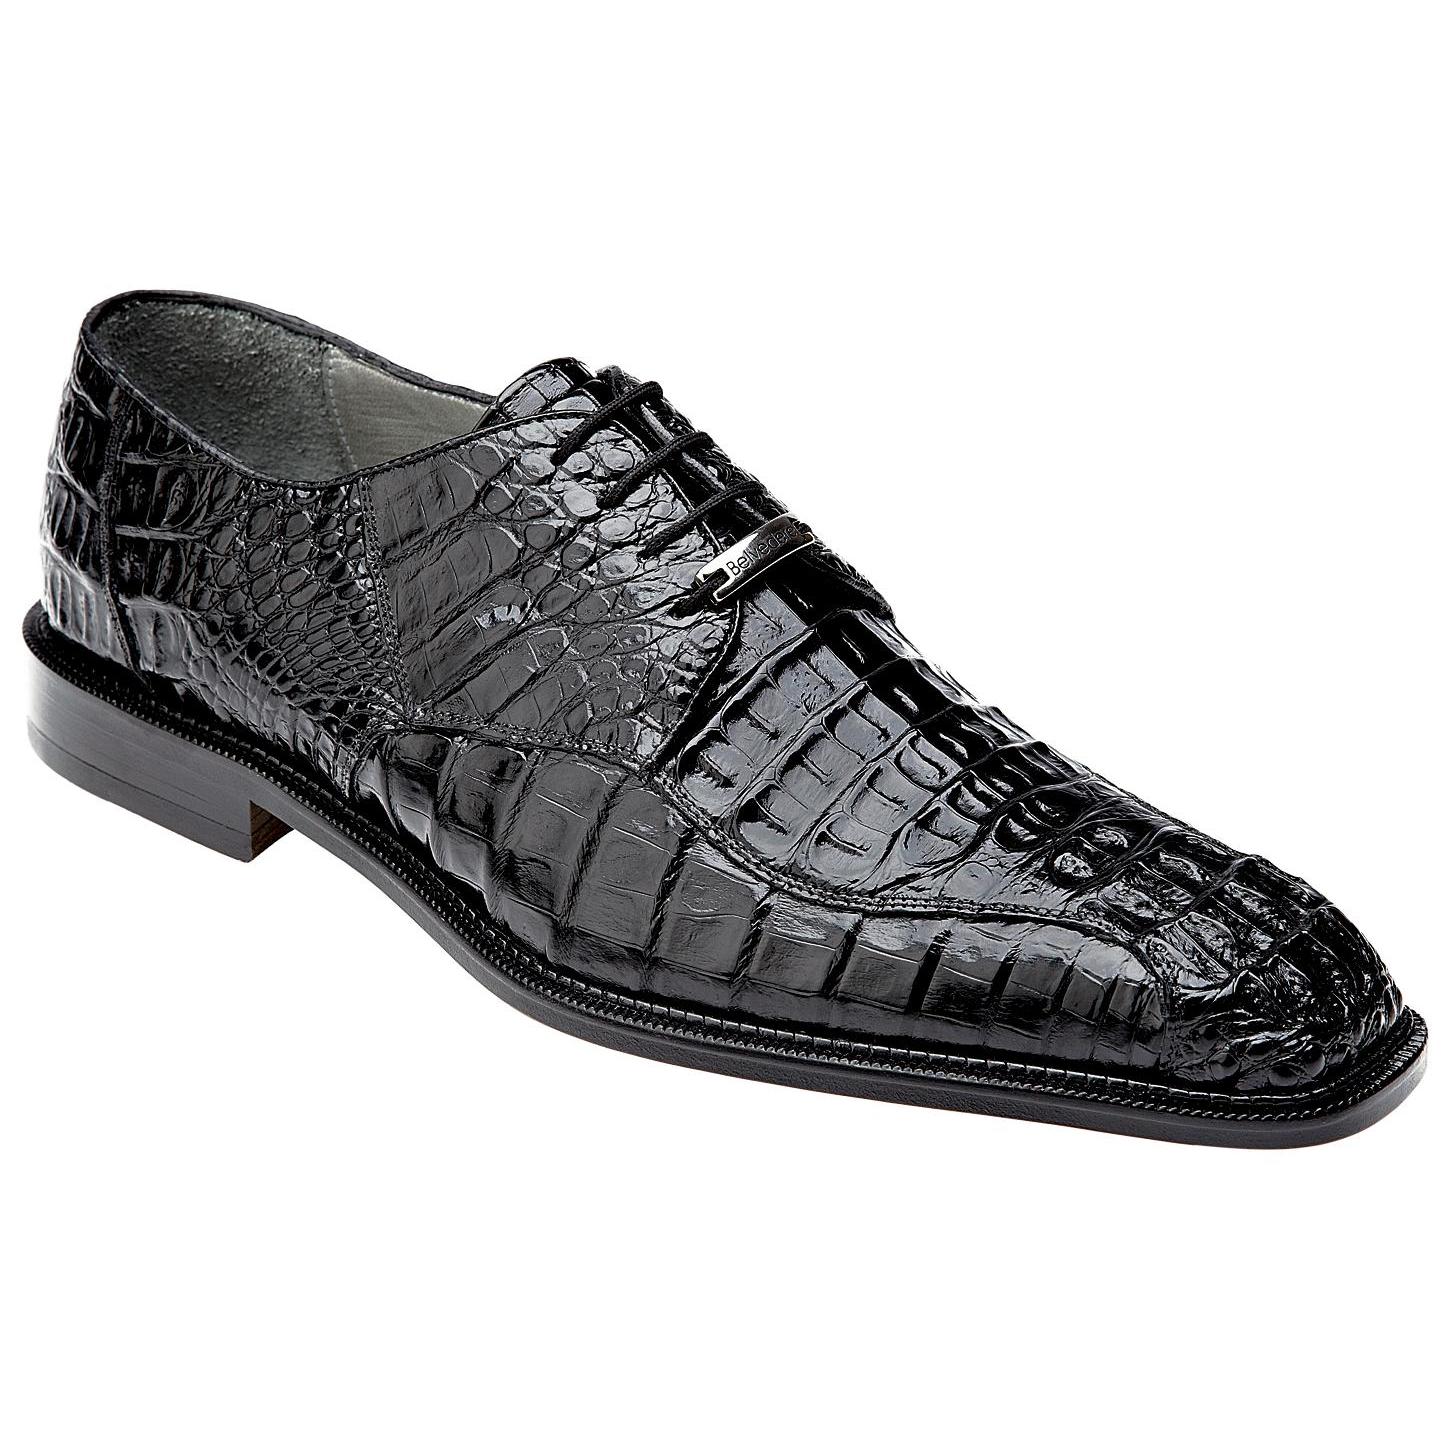 black crocodile shoes